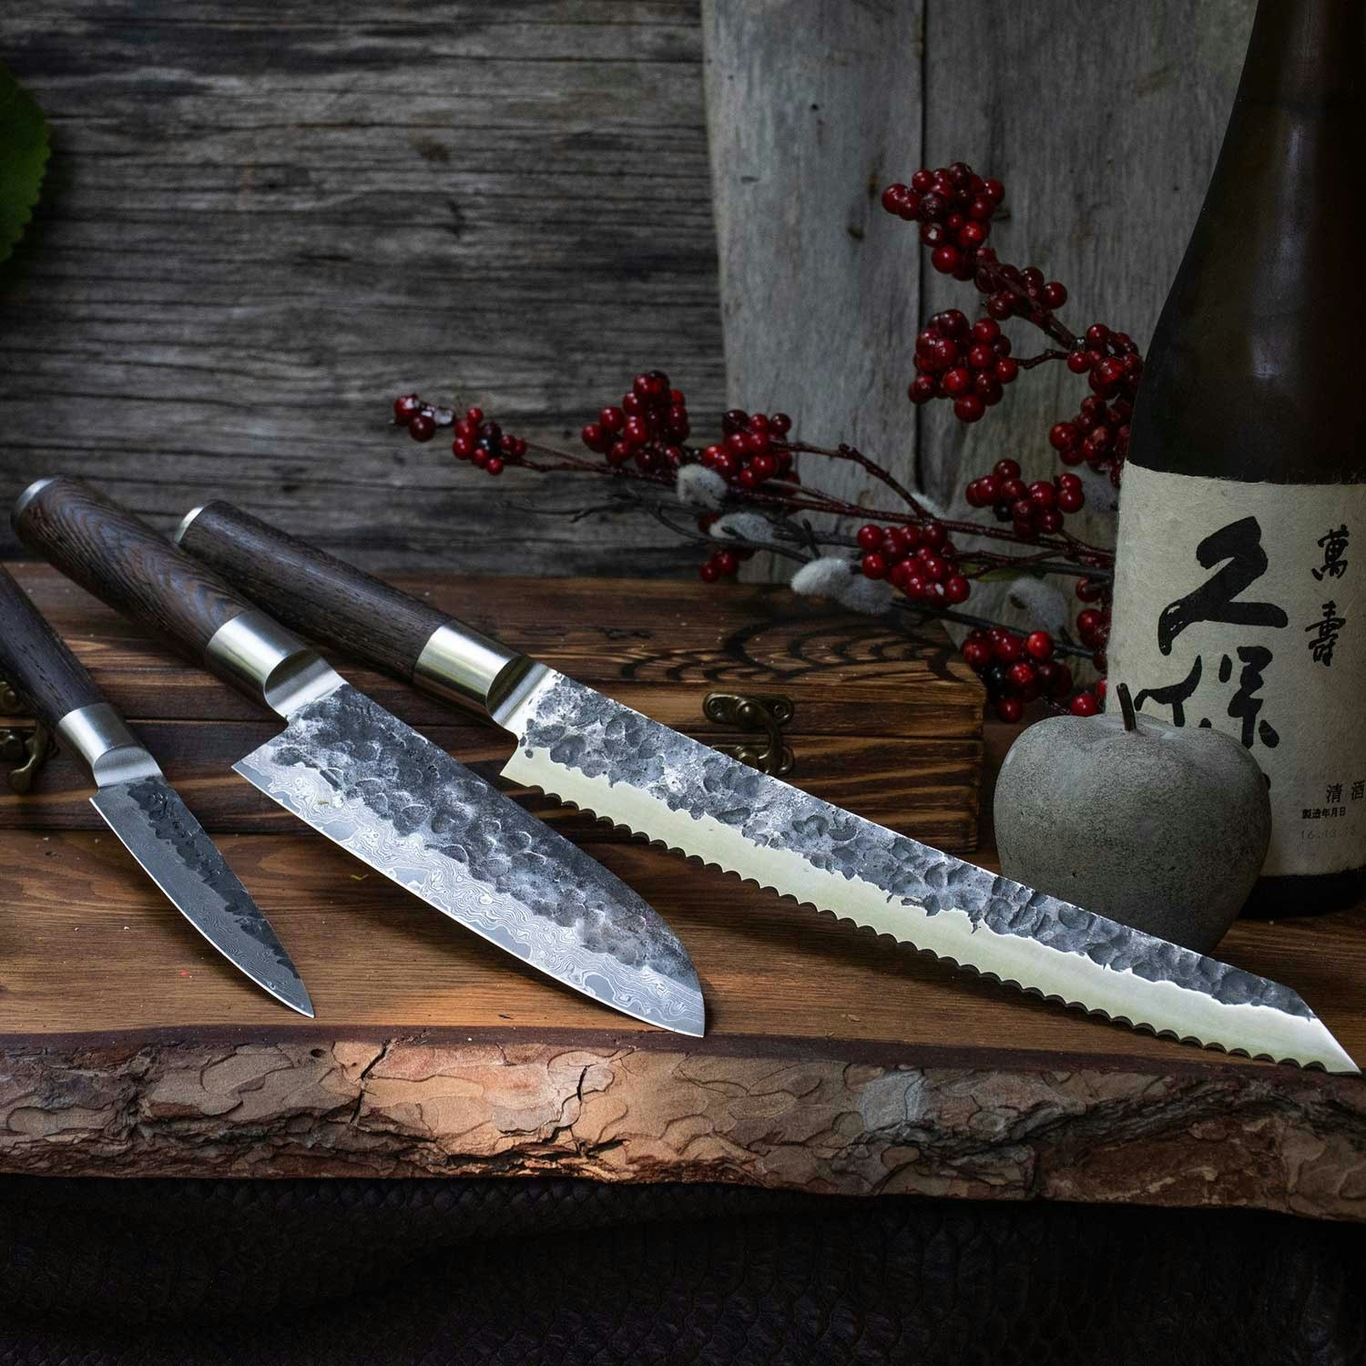 https://royaldesign.com/image/2/satake-kuro-knife-set-3-pieces-2?w=800&quality=80